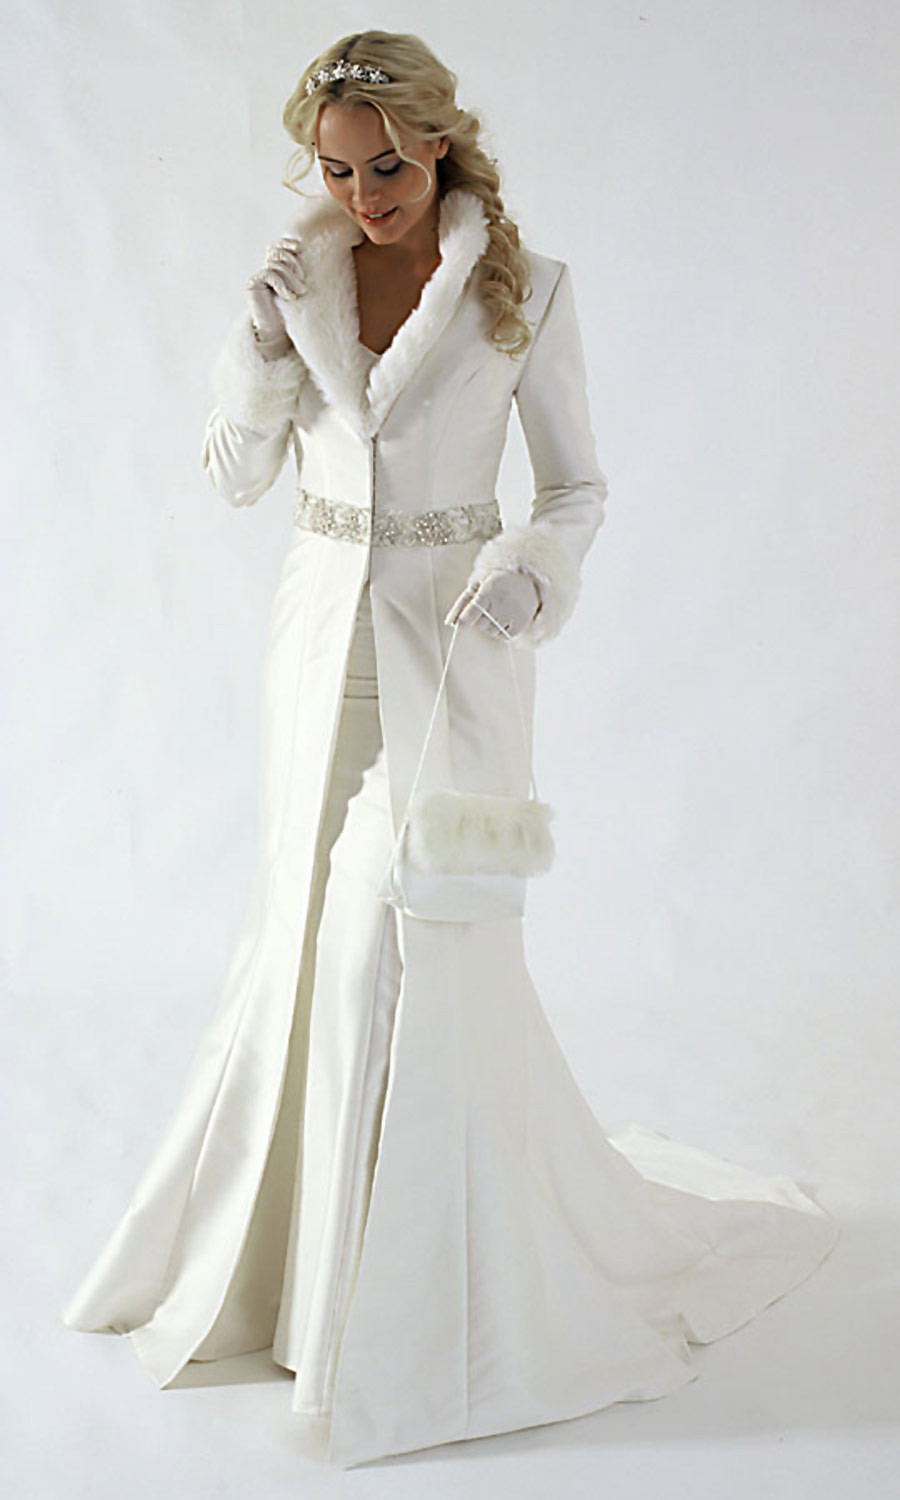 Winter Wedding Dresses
 Winter Wedding Dress Trends for 2010